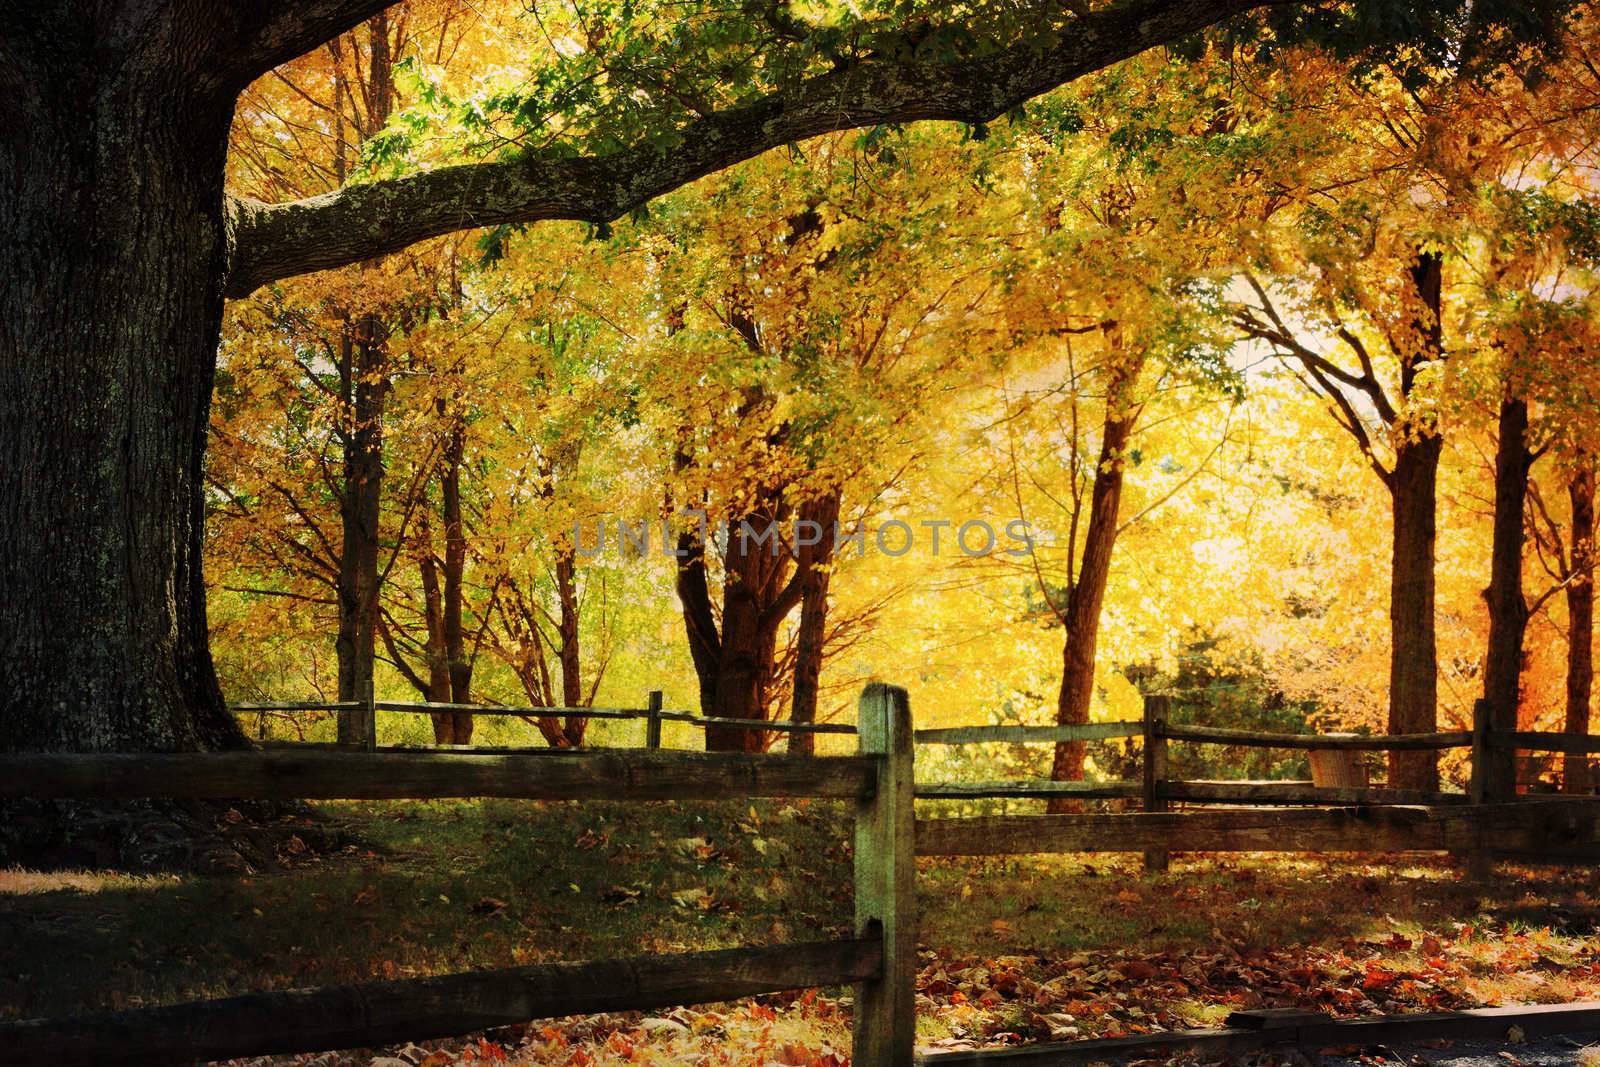 Oak Tree in Autumn by StephanieFrey